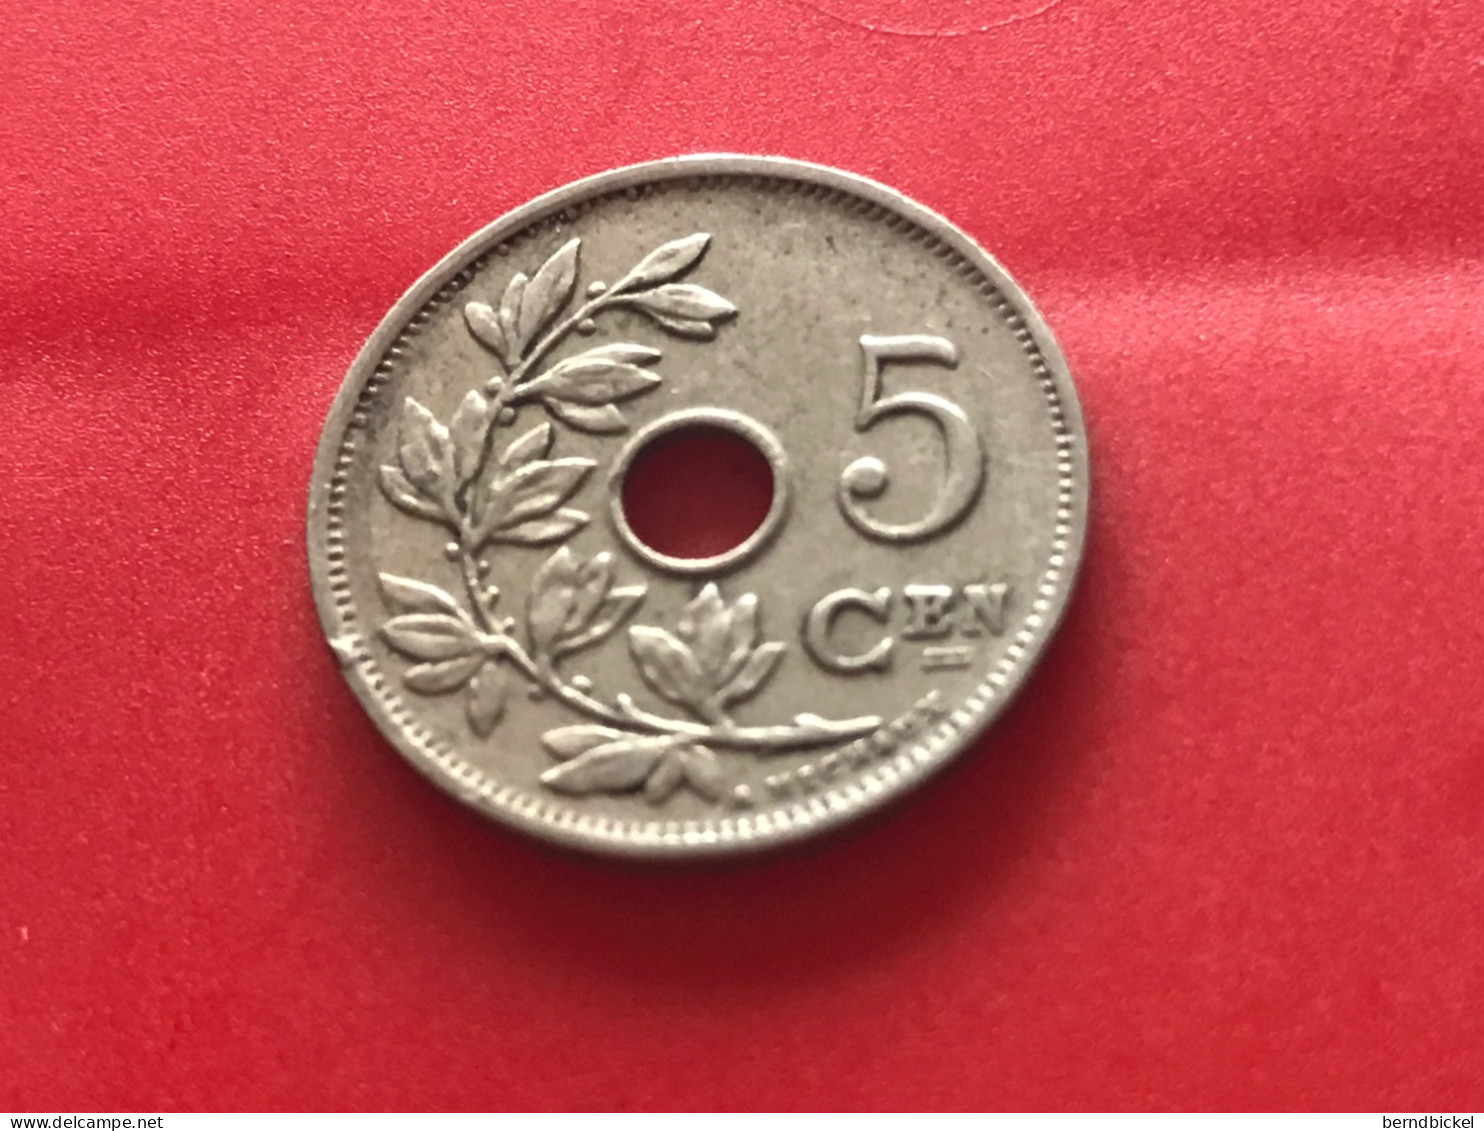 Münze Münzen Umlaufmünze Belgien 5 Centimes 1927 Belgie - 10 Cents